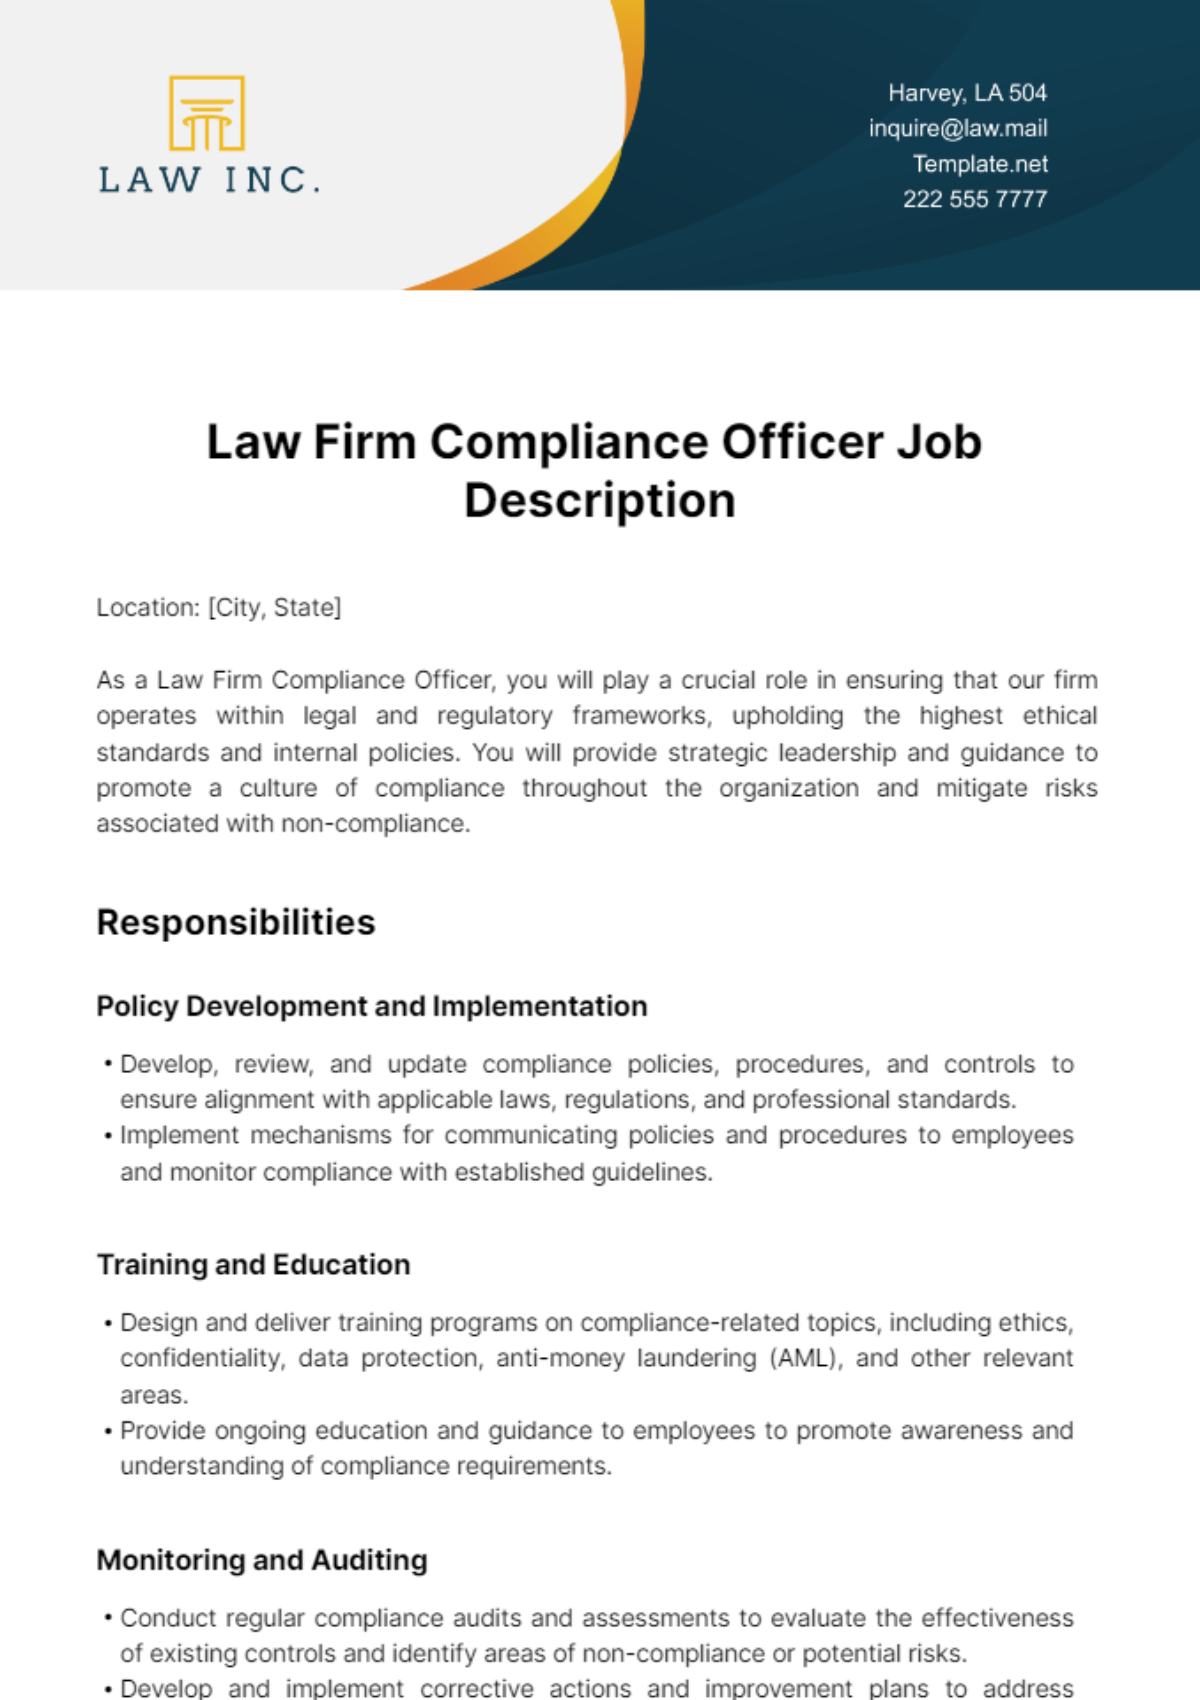 Law Firm Compliance Officer Job Description Template